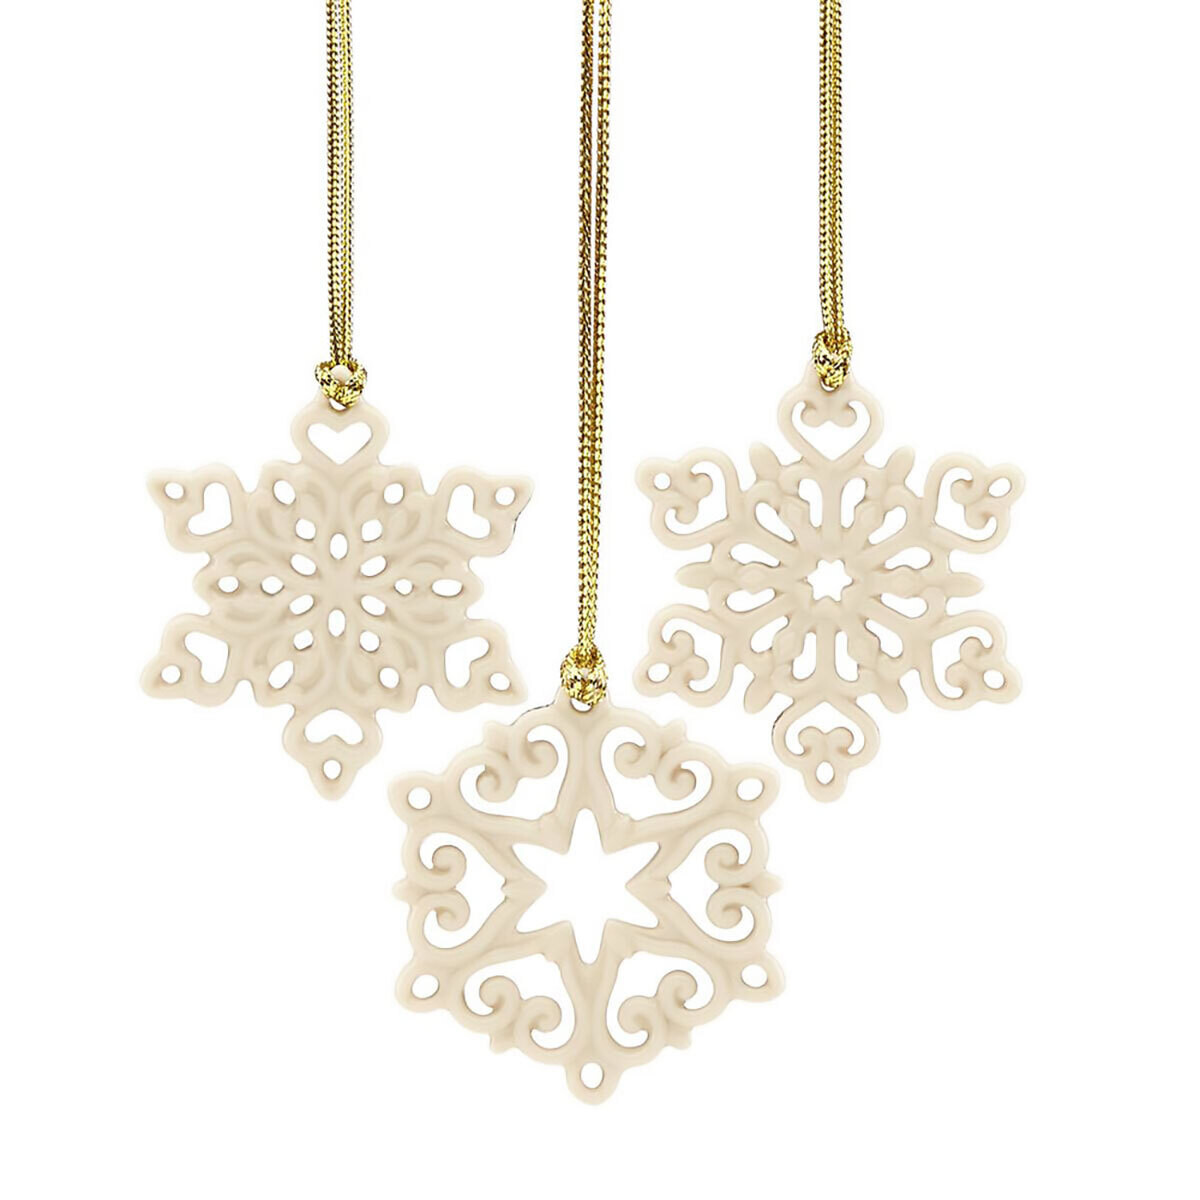 Lenox Pierced Snowflake 3 Piece Ornament Set 888922